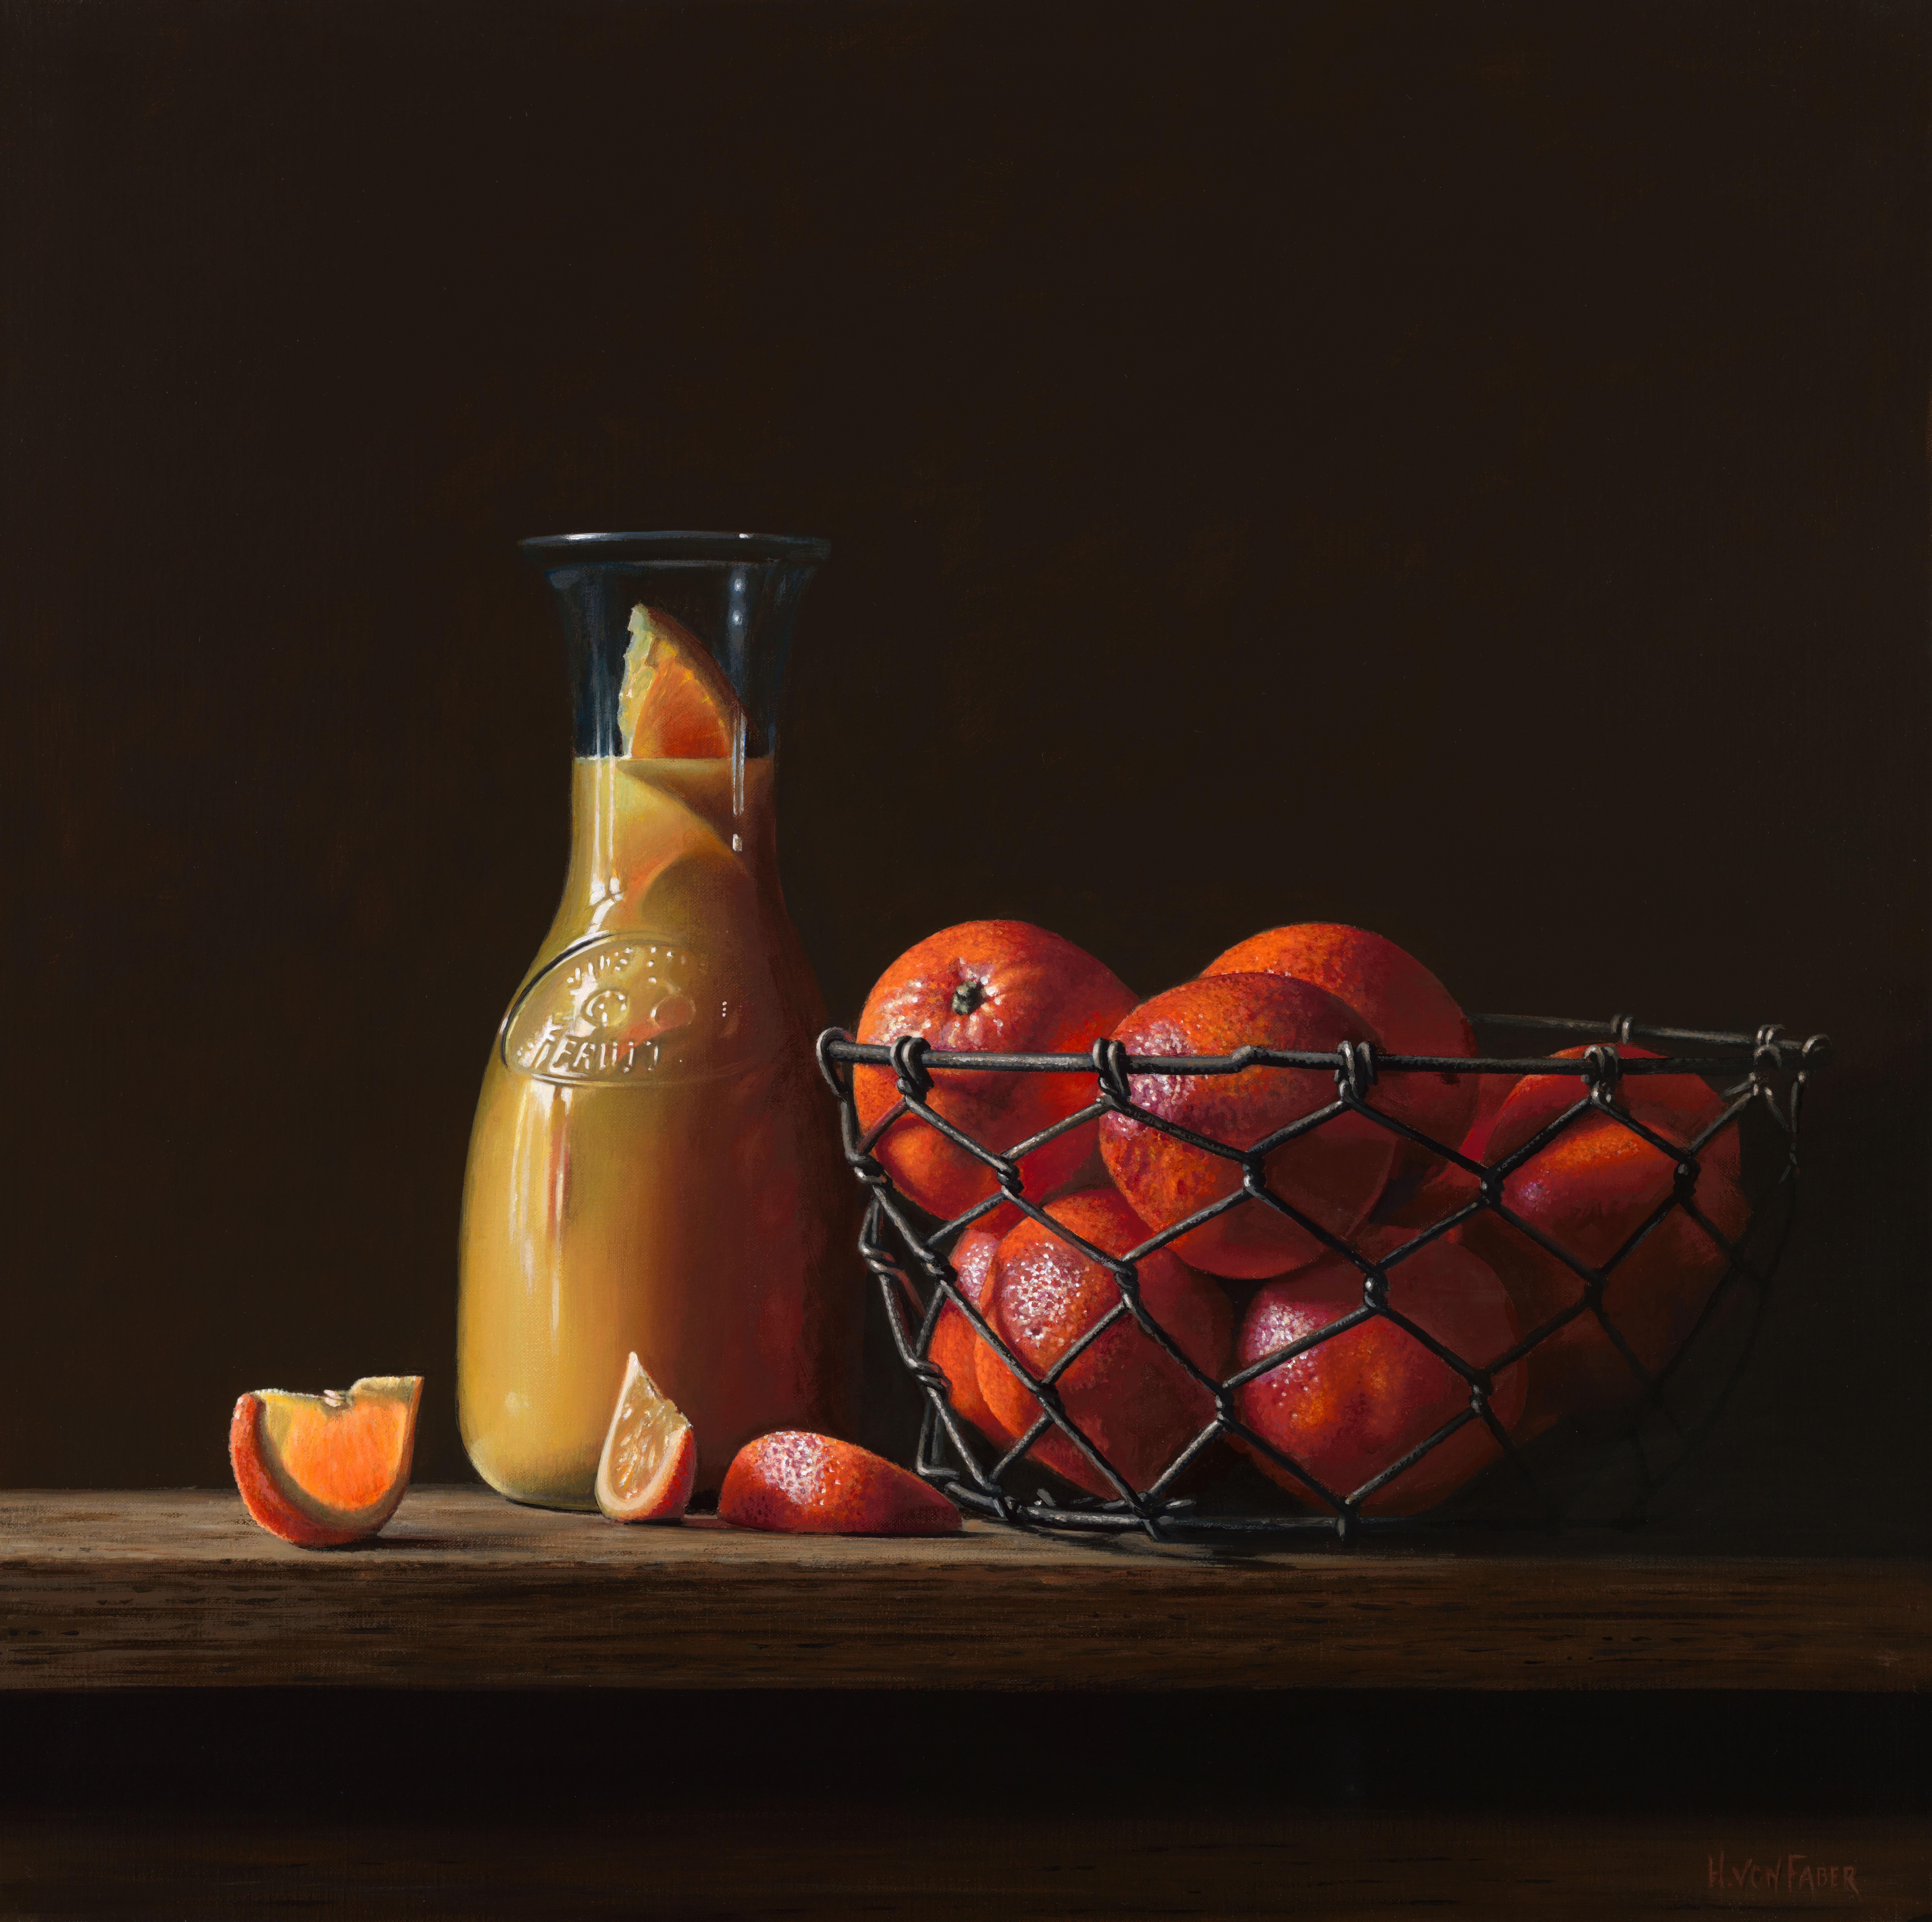 Heidi von Faber Still-Life Painting - Oranges in a Basket-21st Contemporary Dutch Stilllife painting with Orange-juice